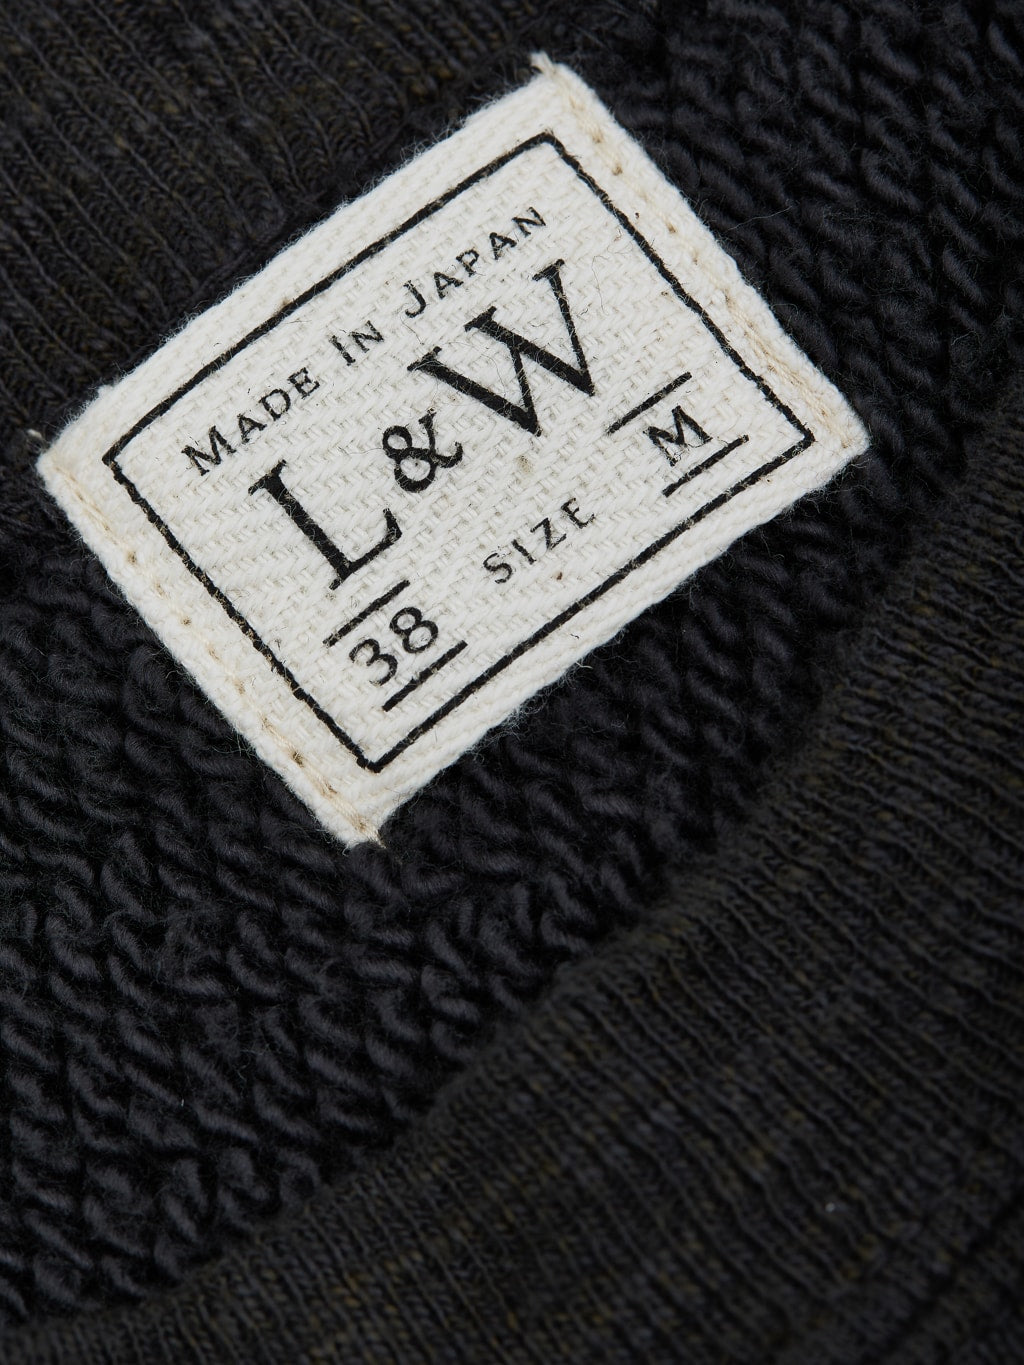 loop and weft big loopback fleece side panel sweatshirt black interior tag